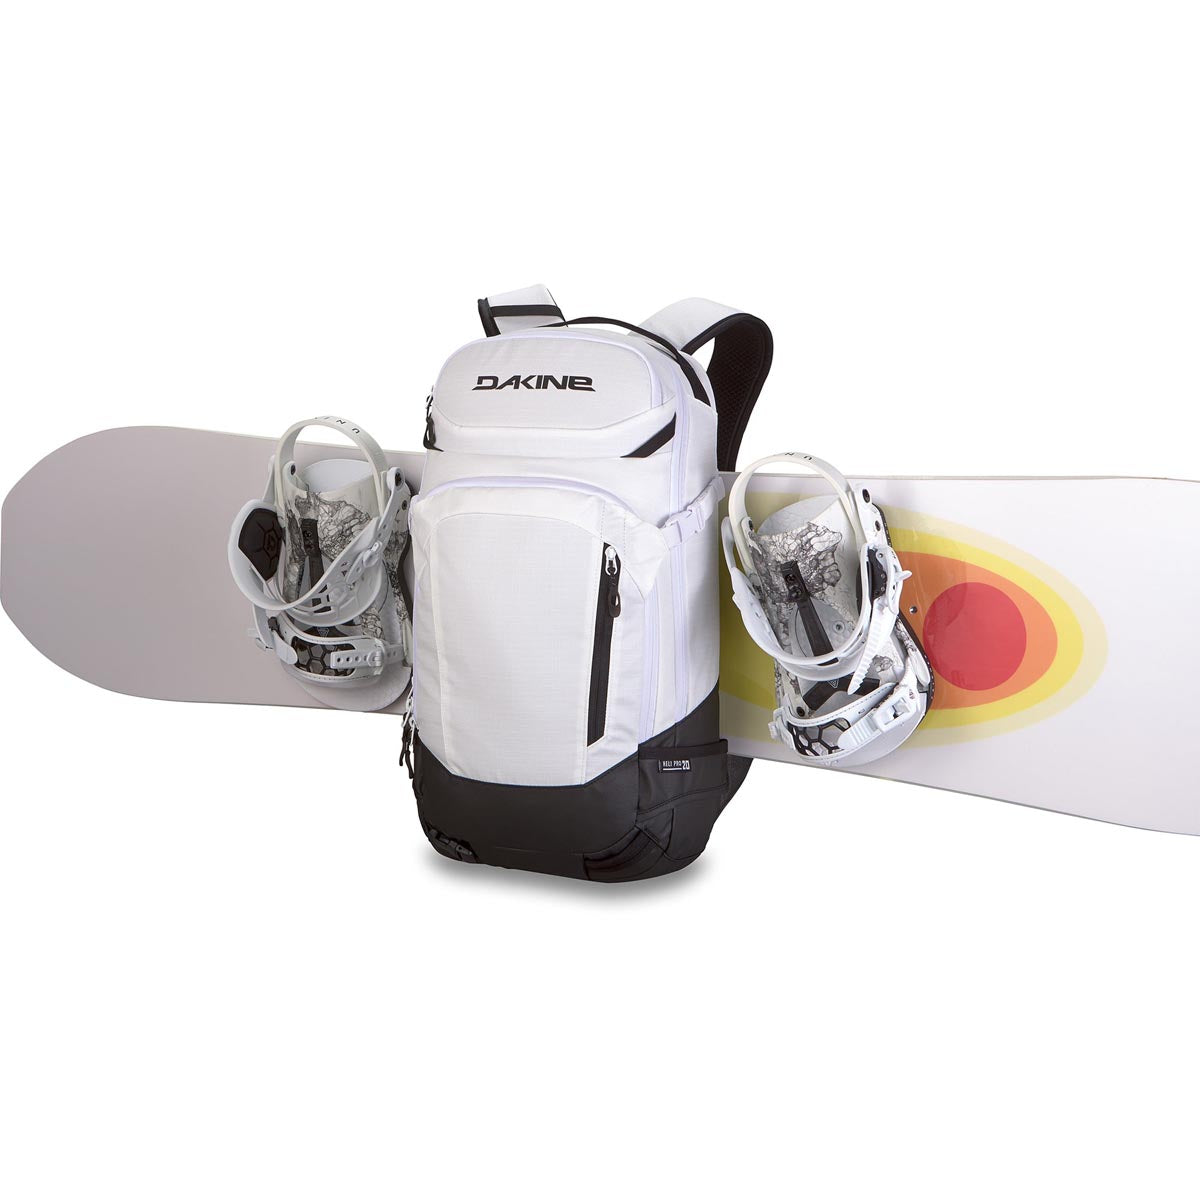 Dakine Heli Pro 20l Backpack - Oceania image 4